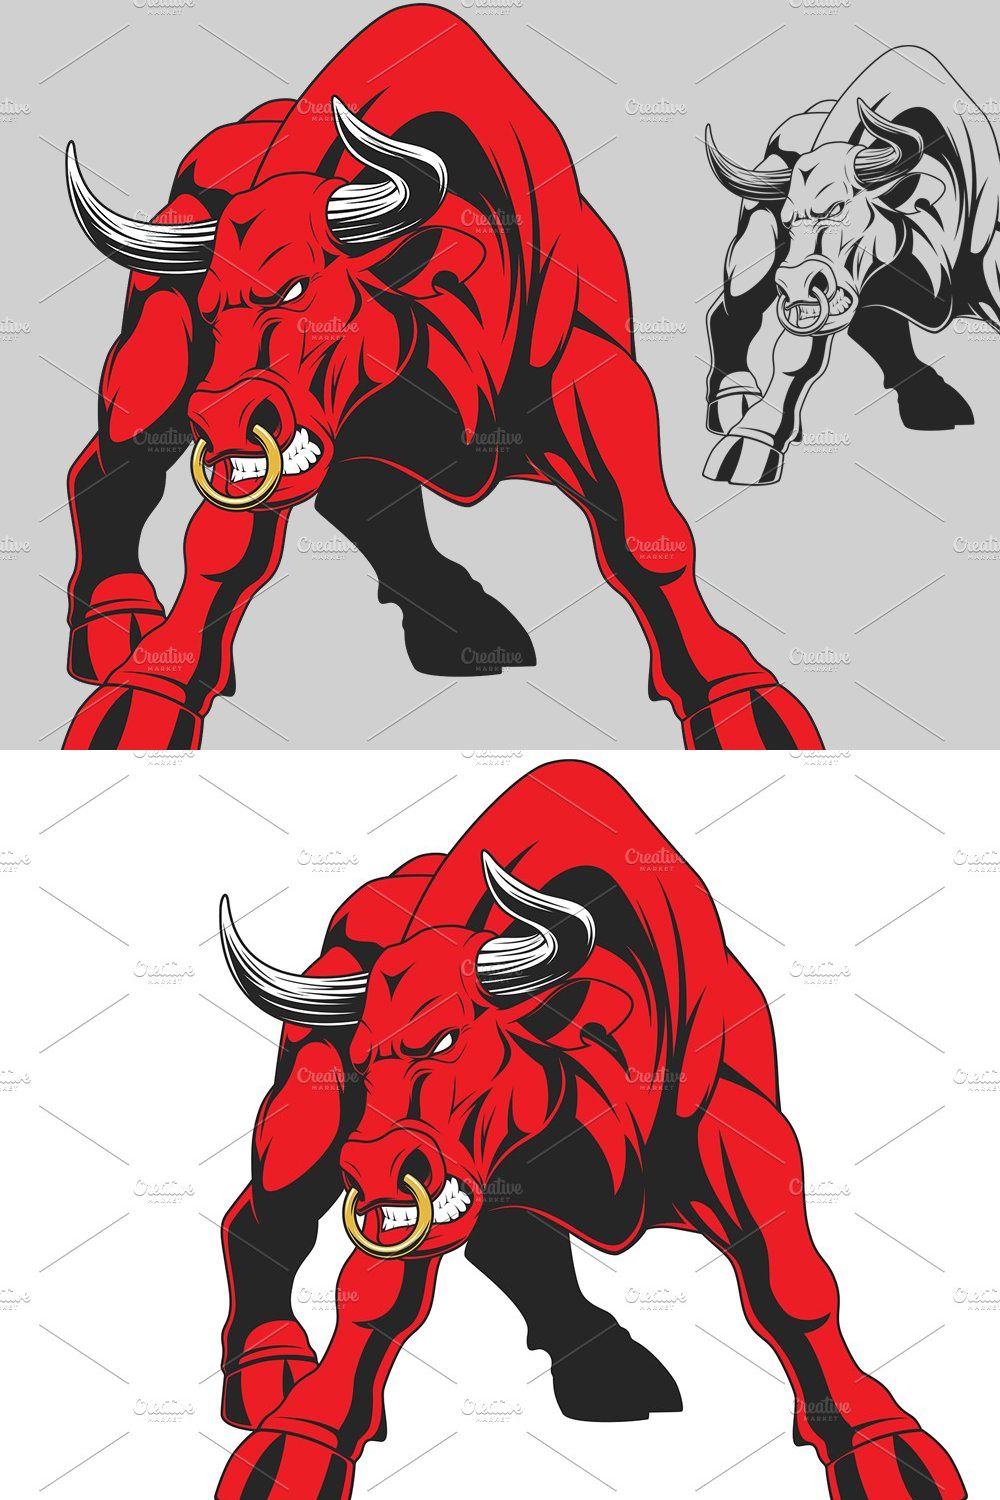 Ferocious bull pinterest preview image.